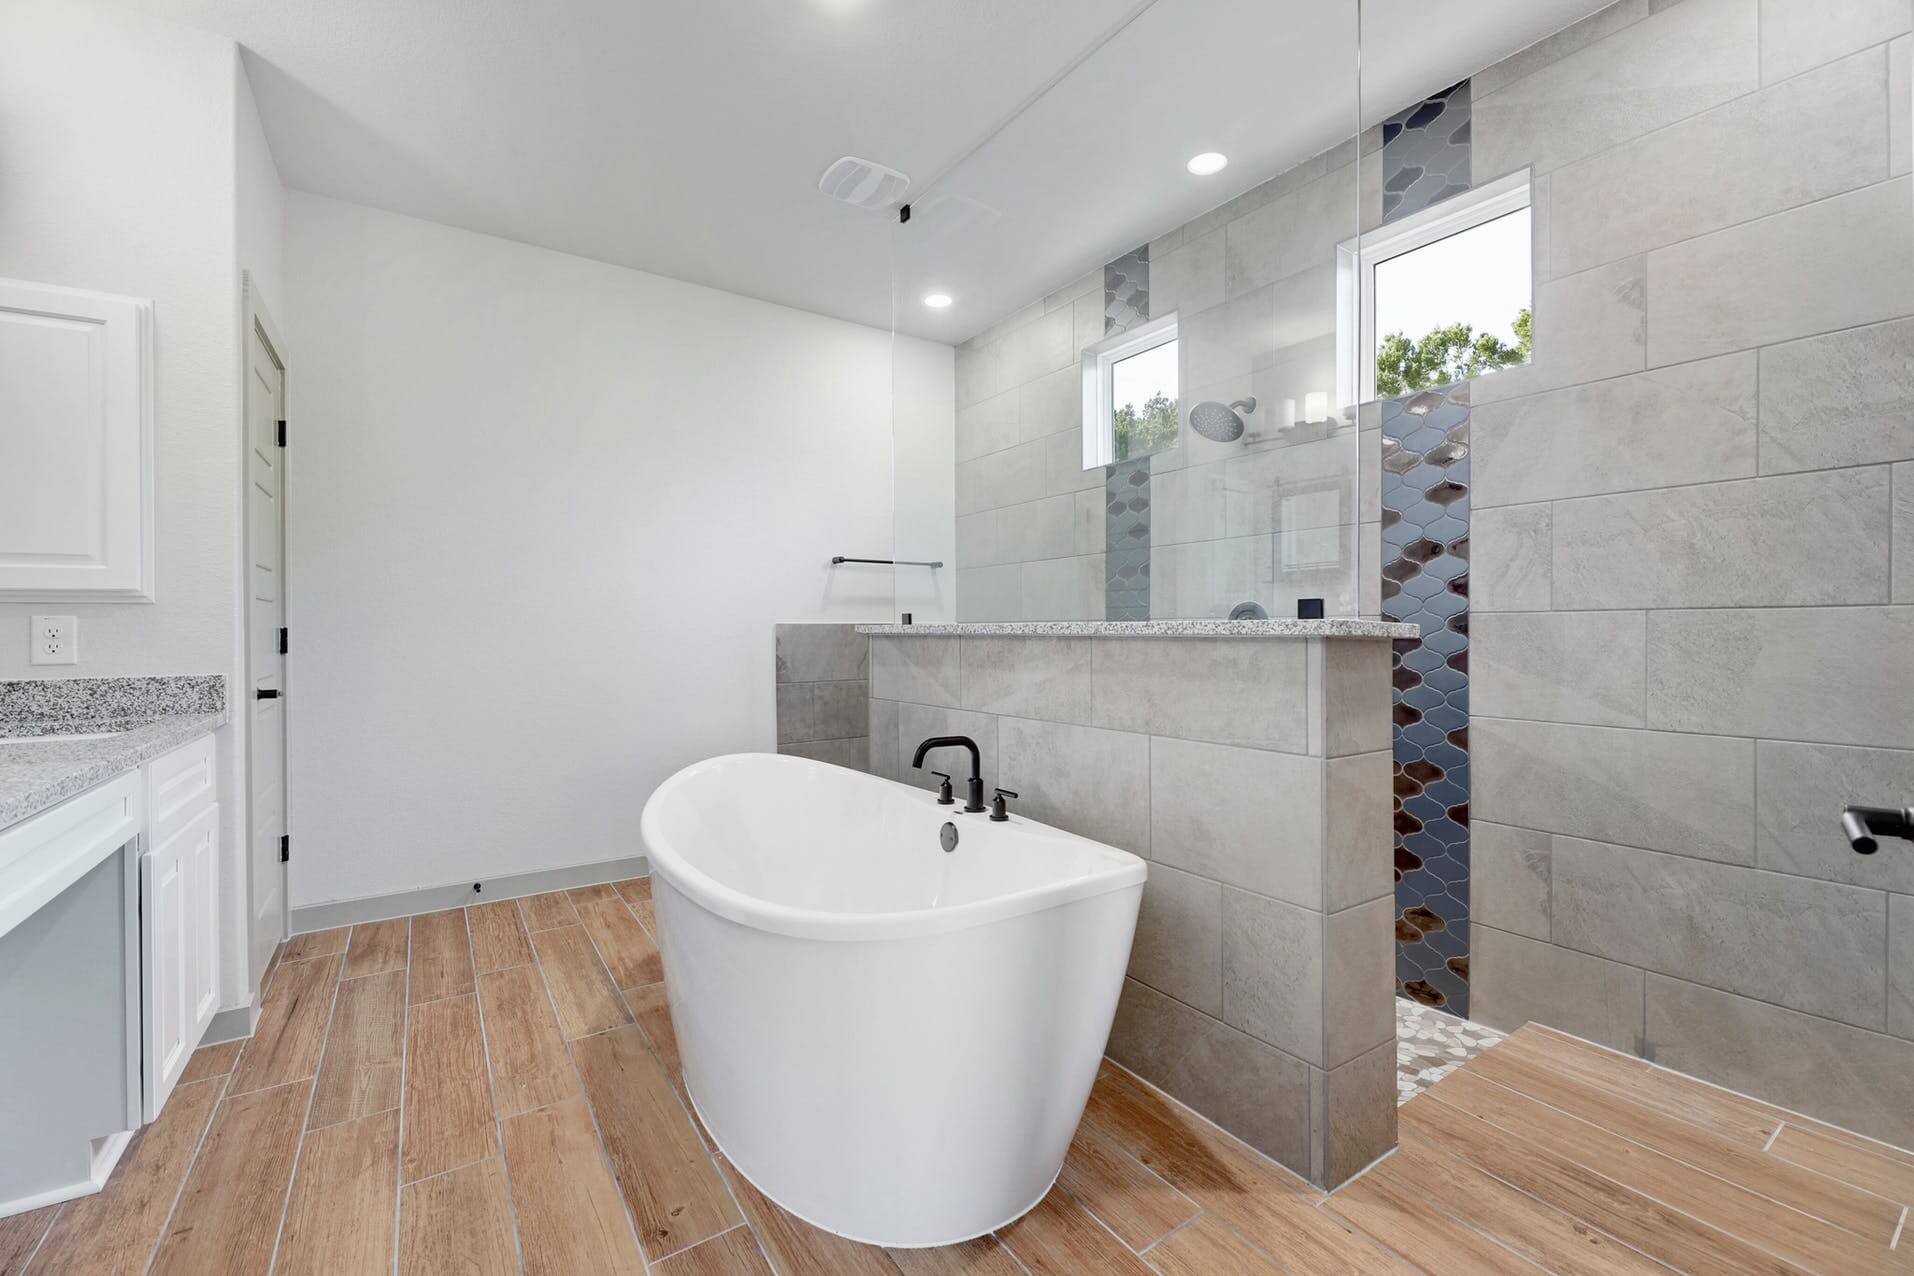 A modern bathroom with a white tub and wood floors.